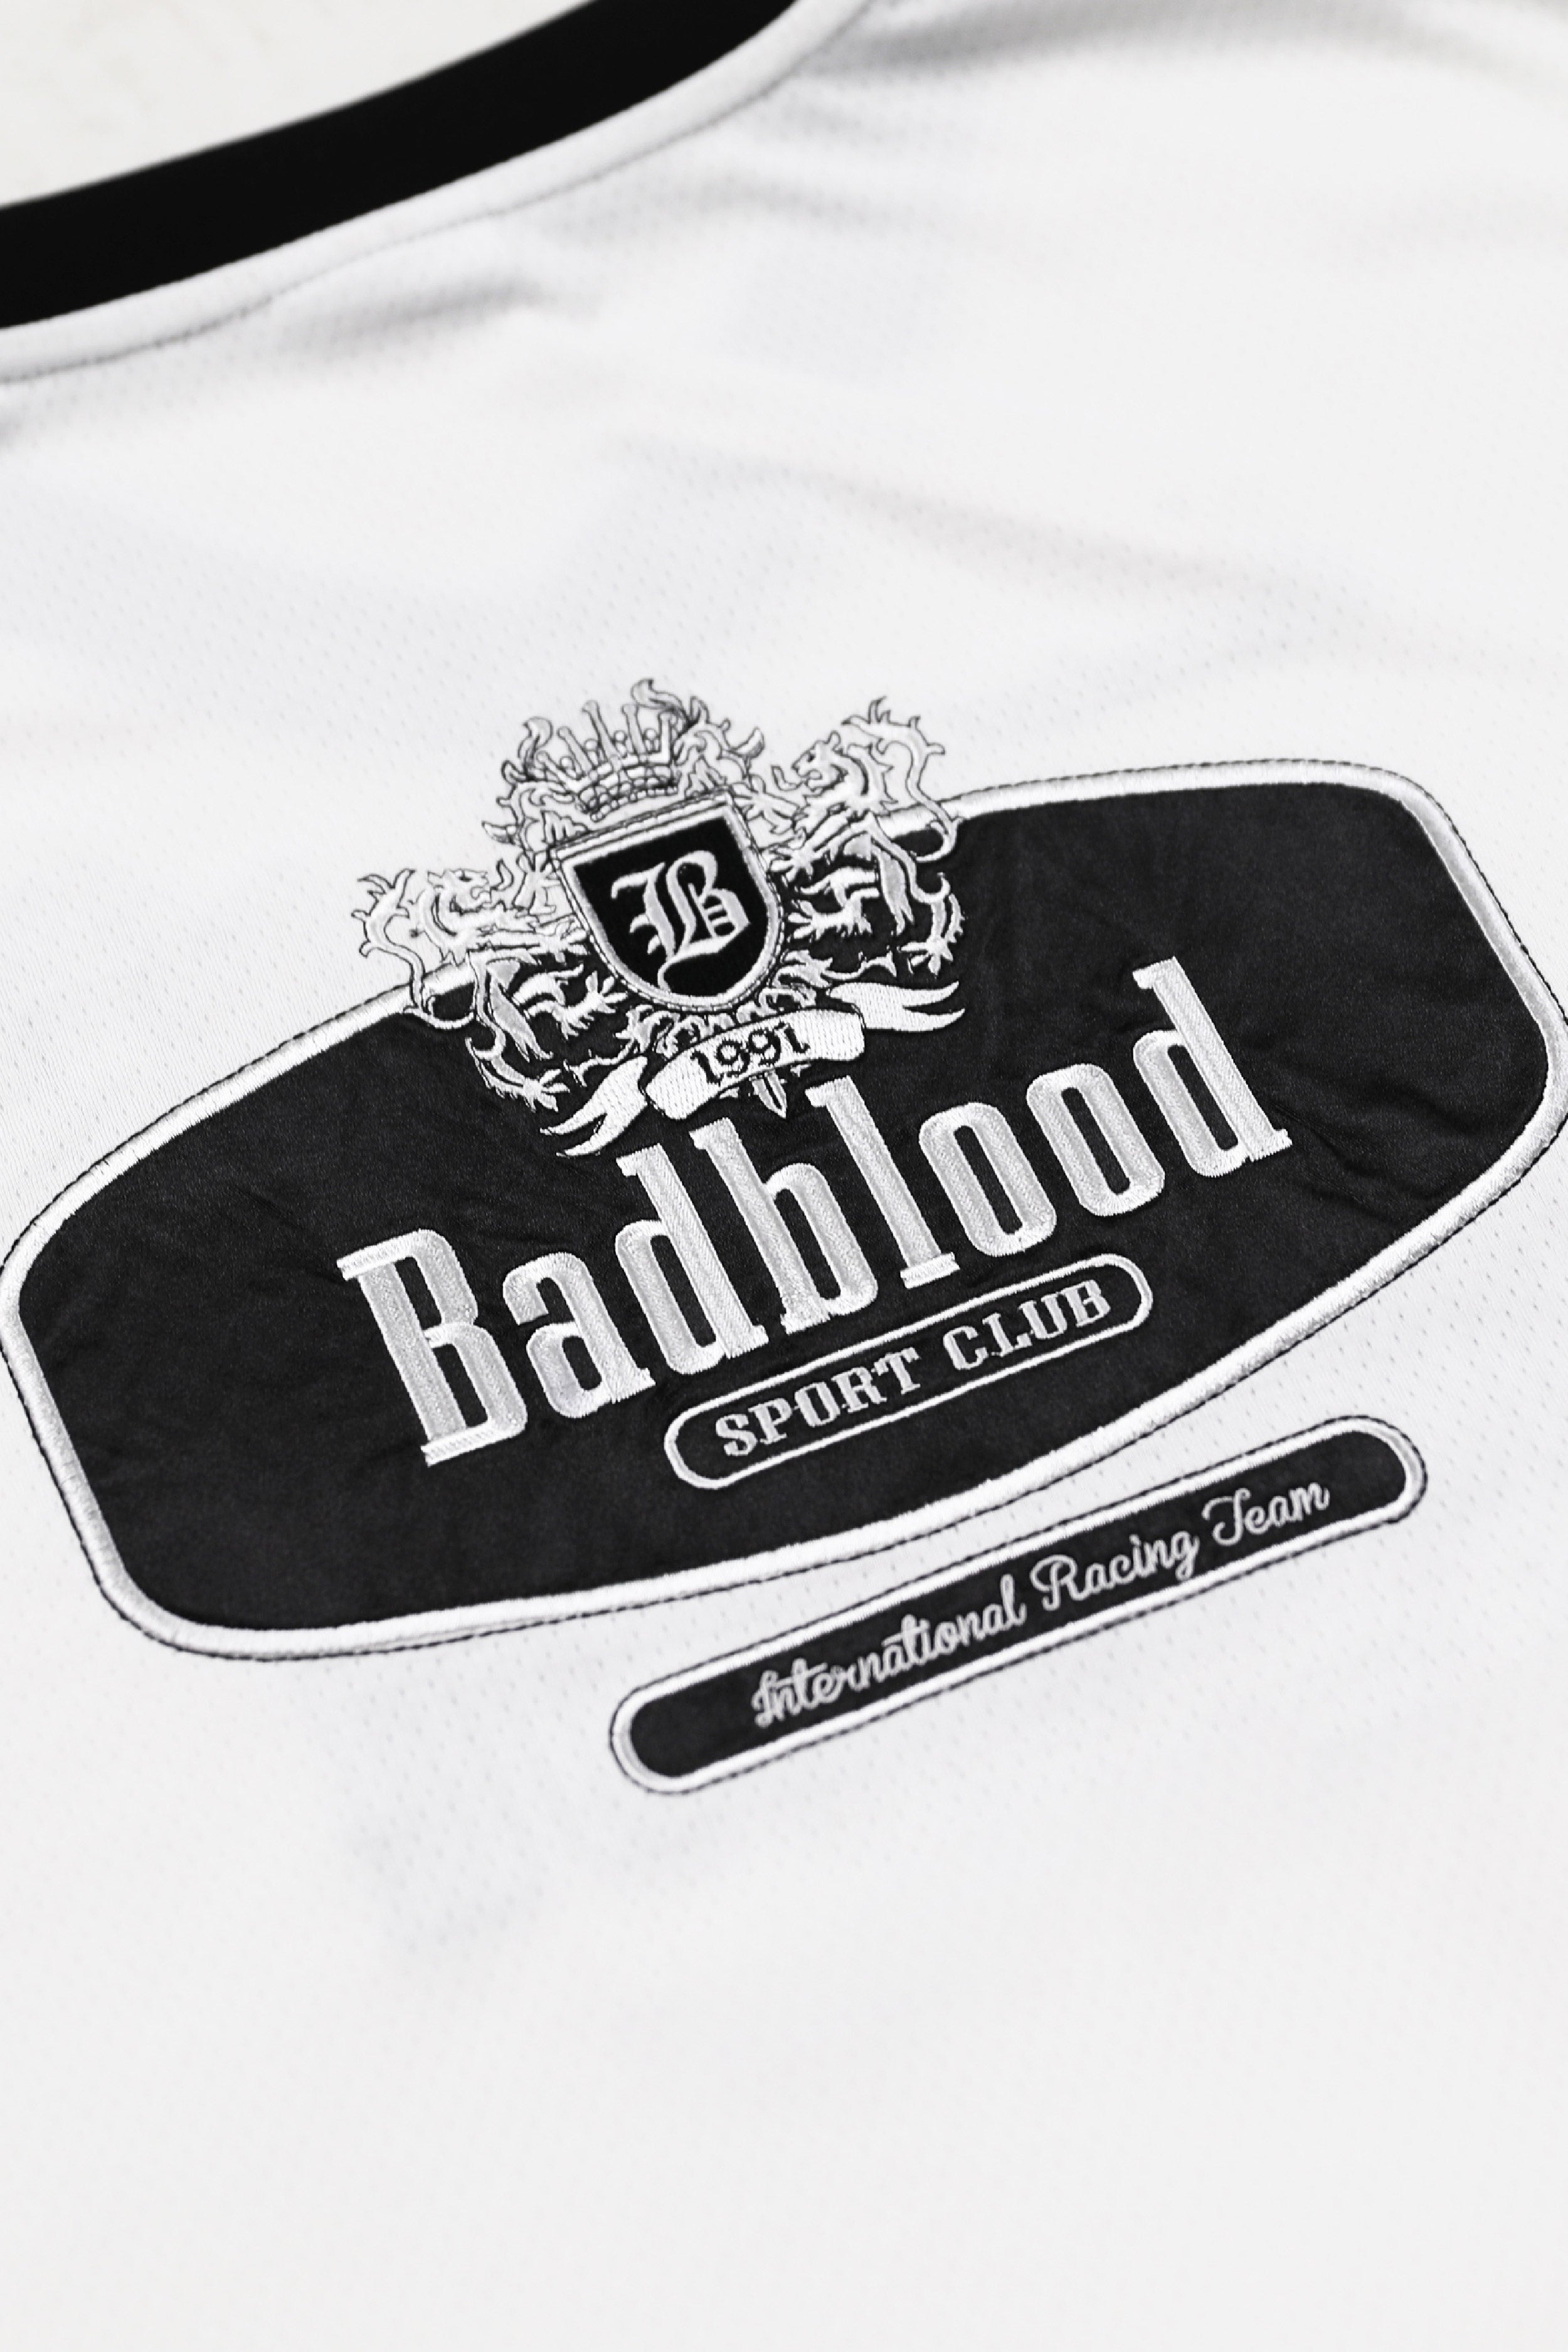 Badblood Sports Club 1/2 Tee White